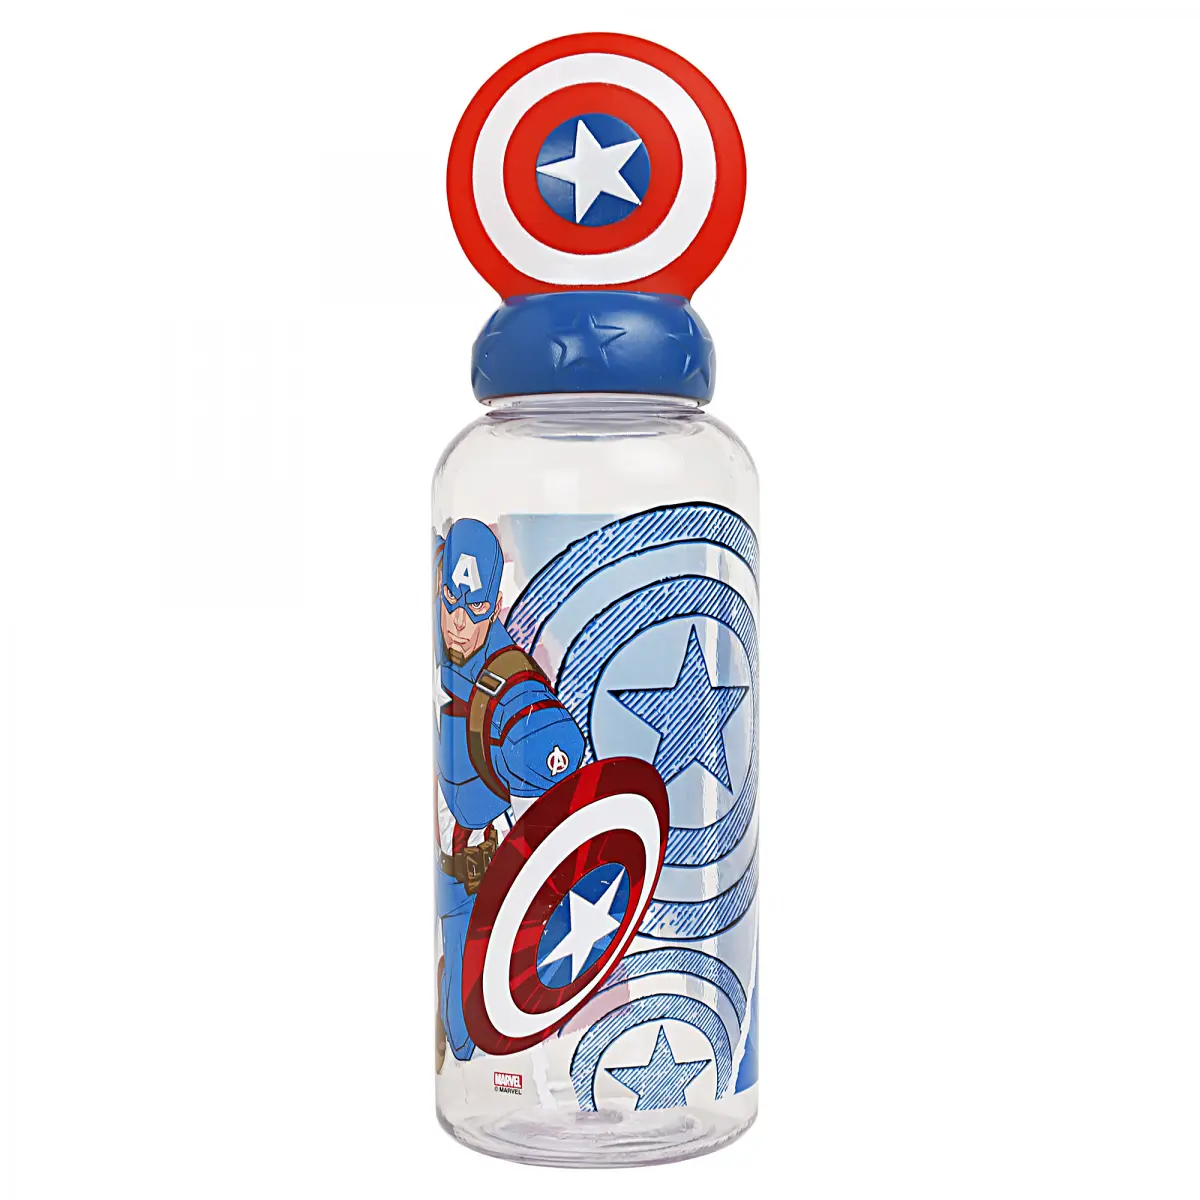 Disney Captain America Stor 3D Figurine Water Bottle, 560ml, Multicolour